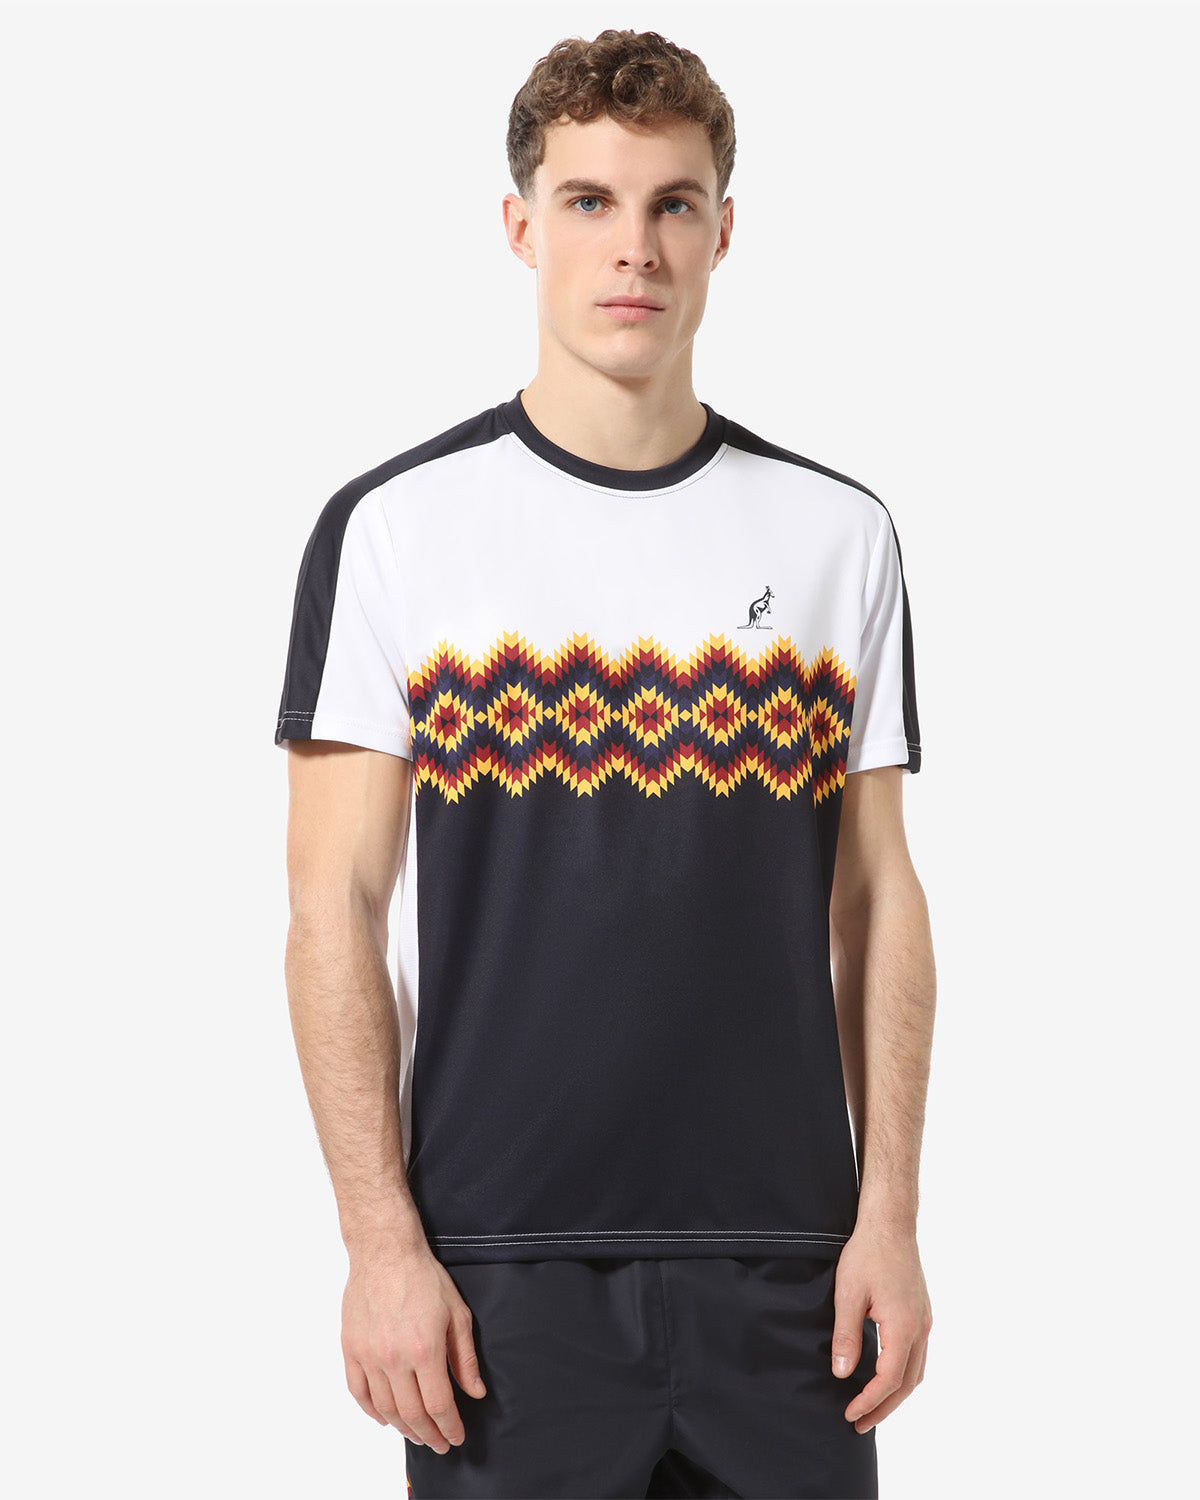 Ethnic T-shirt: Australian Tennis